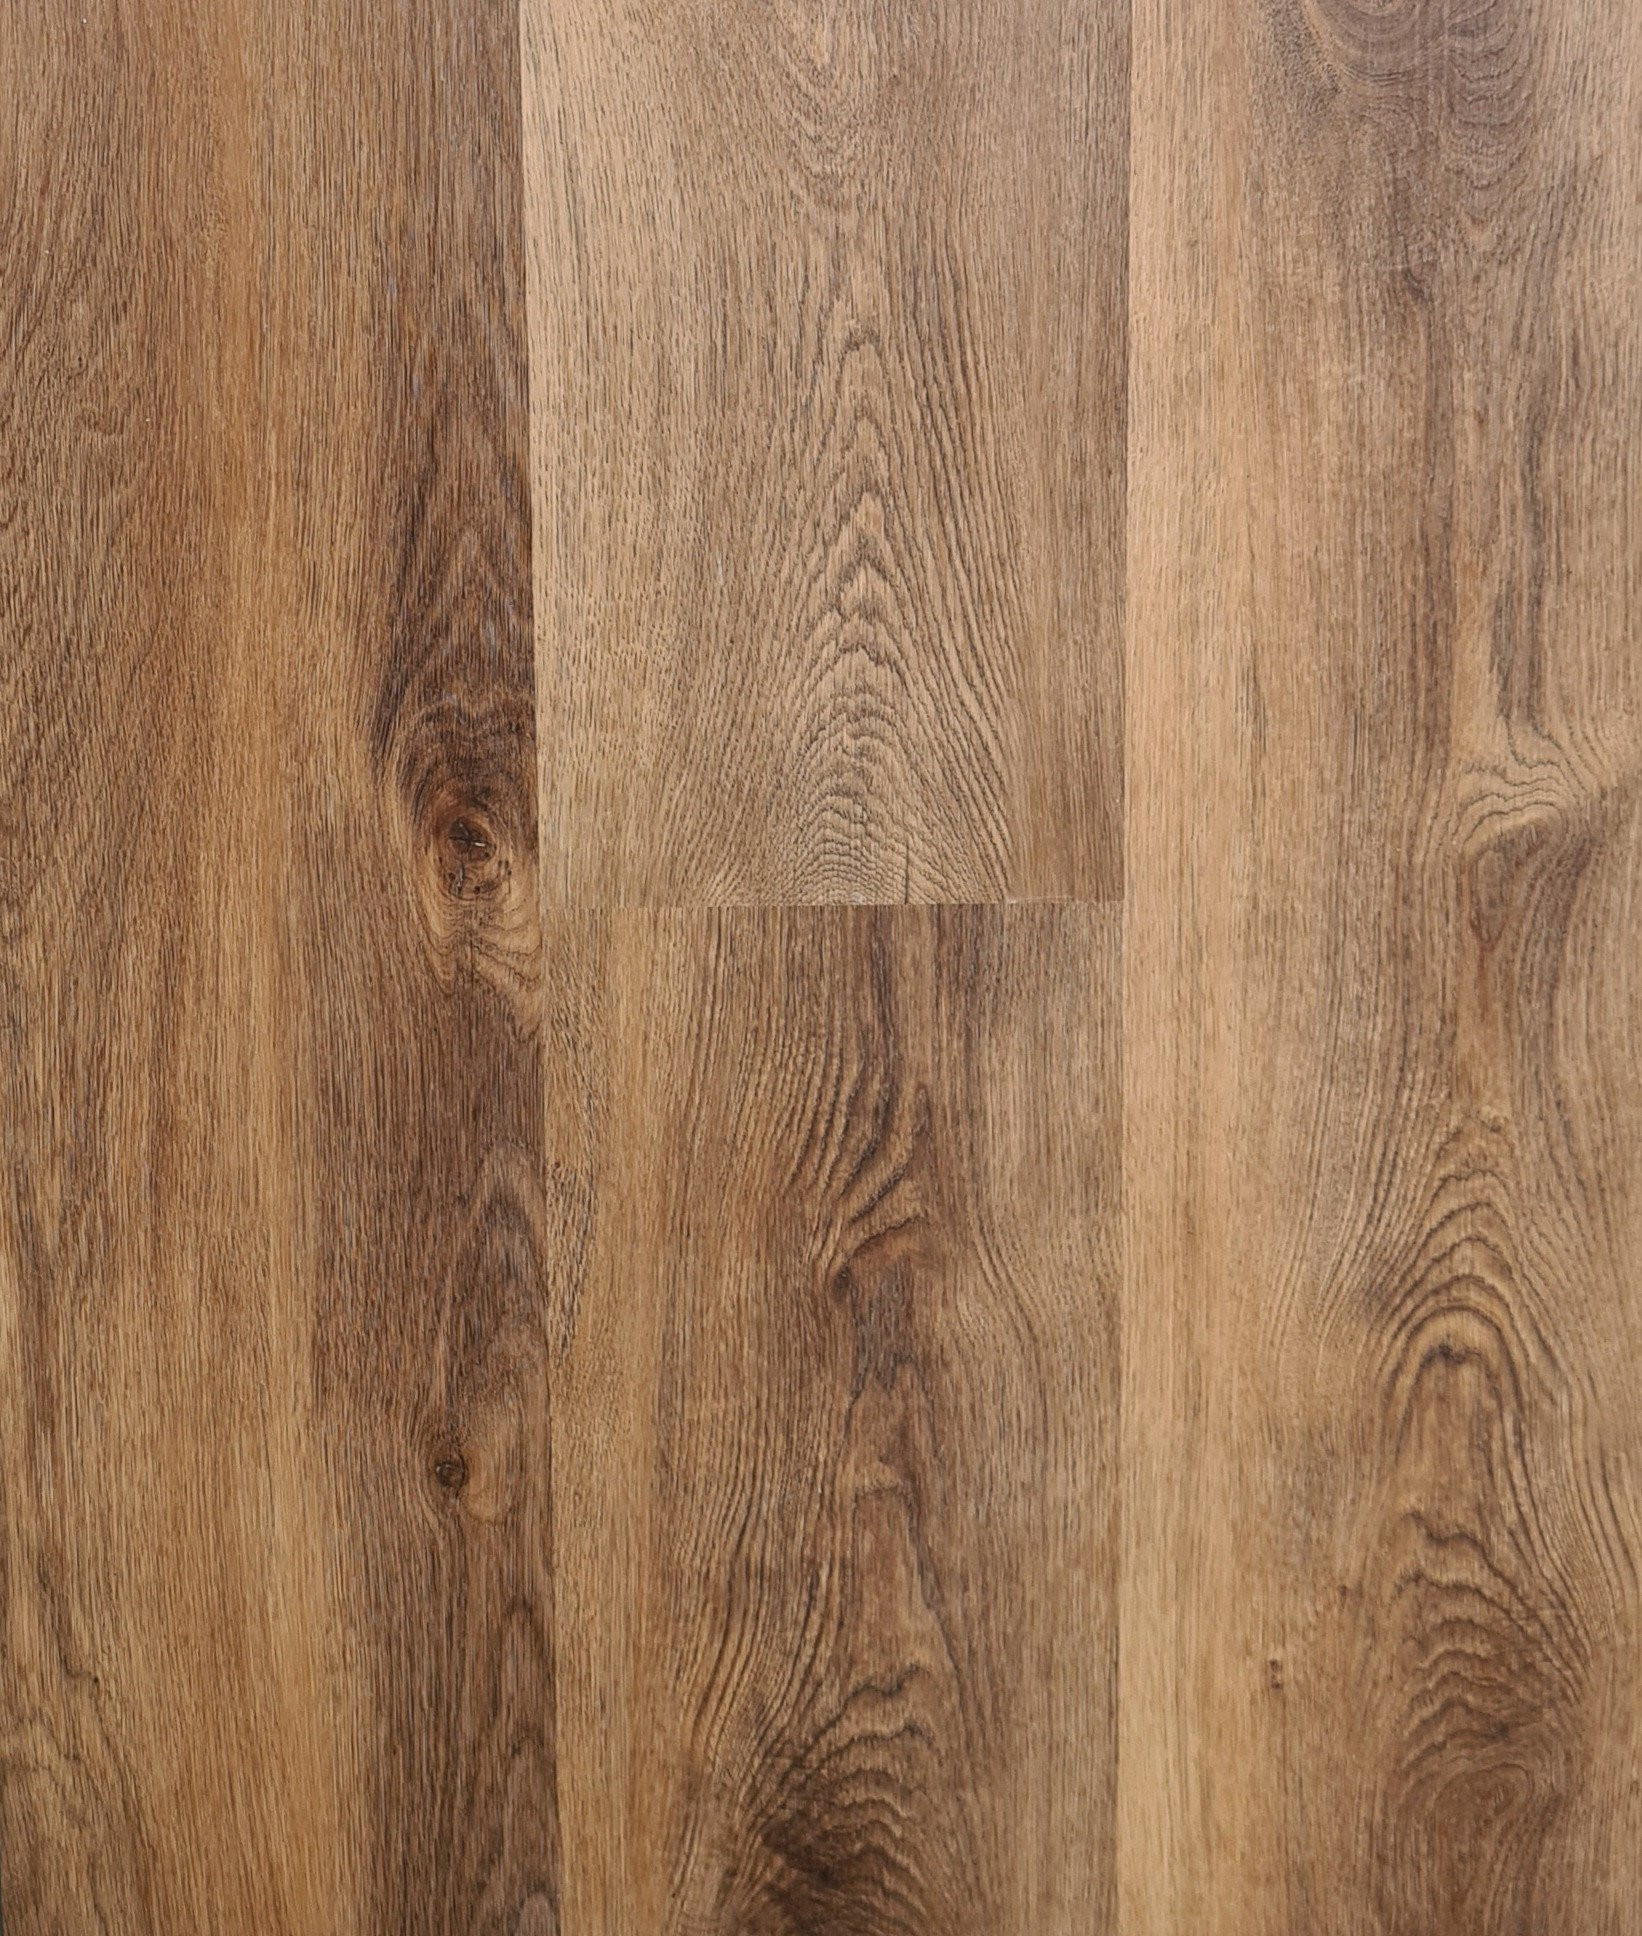 Hybrid Flooring Clearance - Natural Oak Hybrid Flooring - 146200